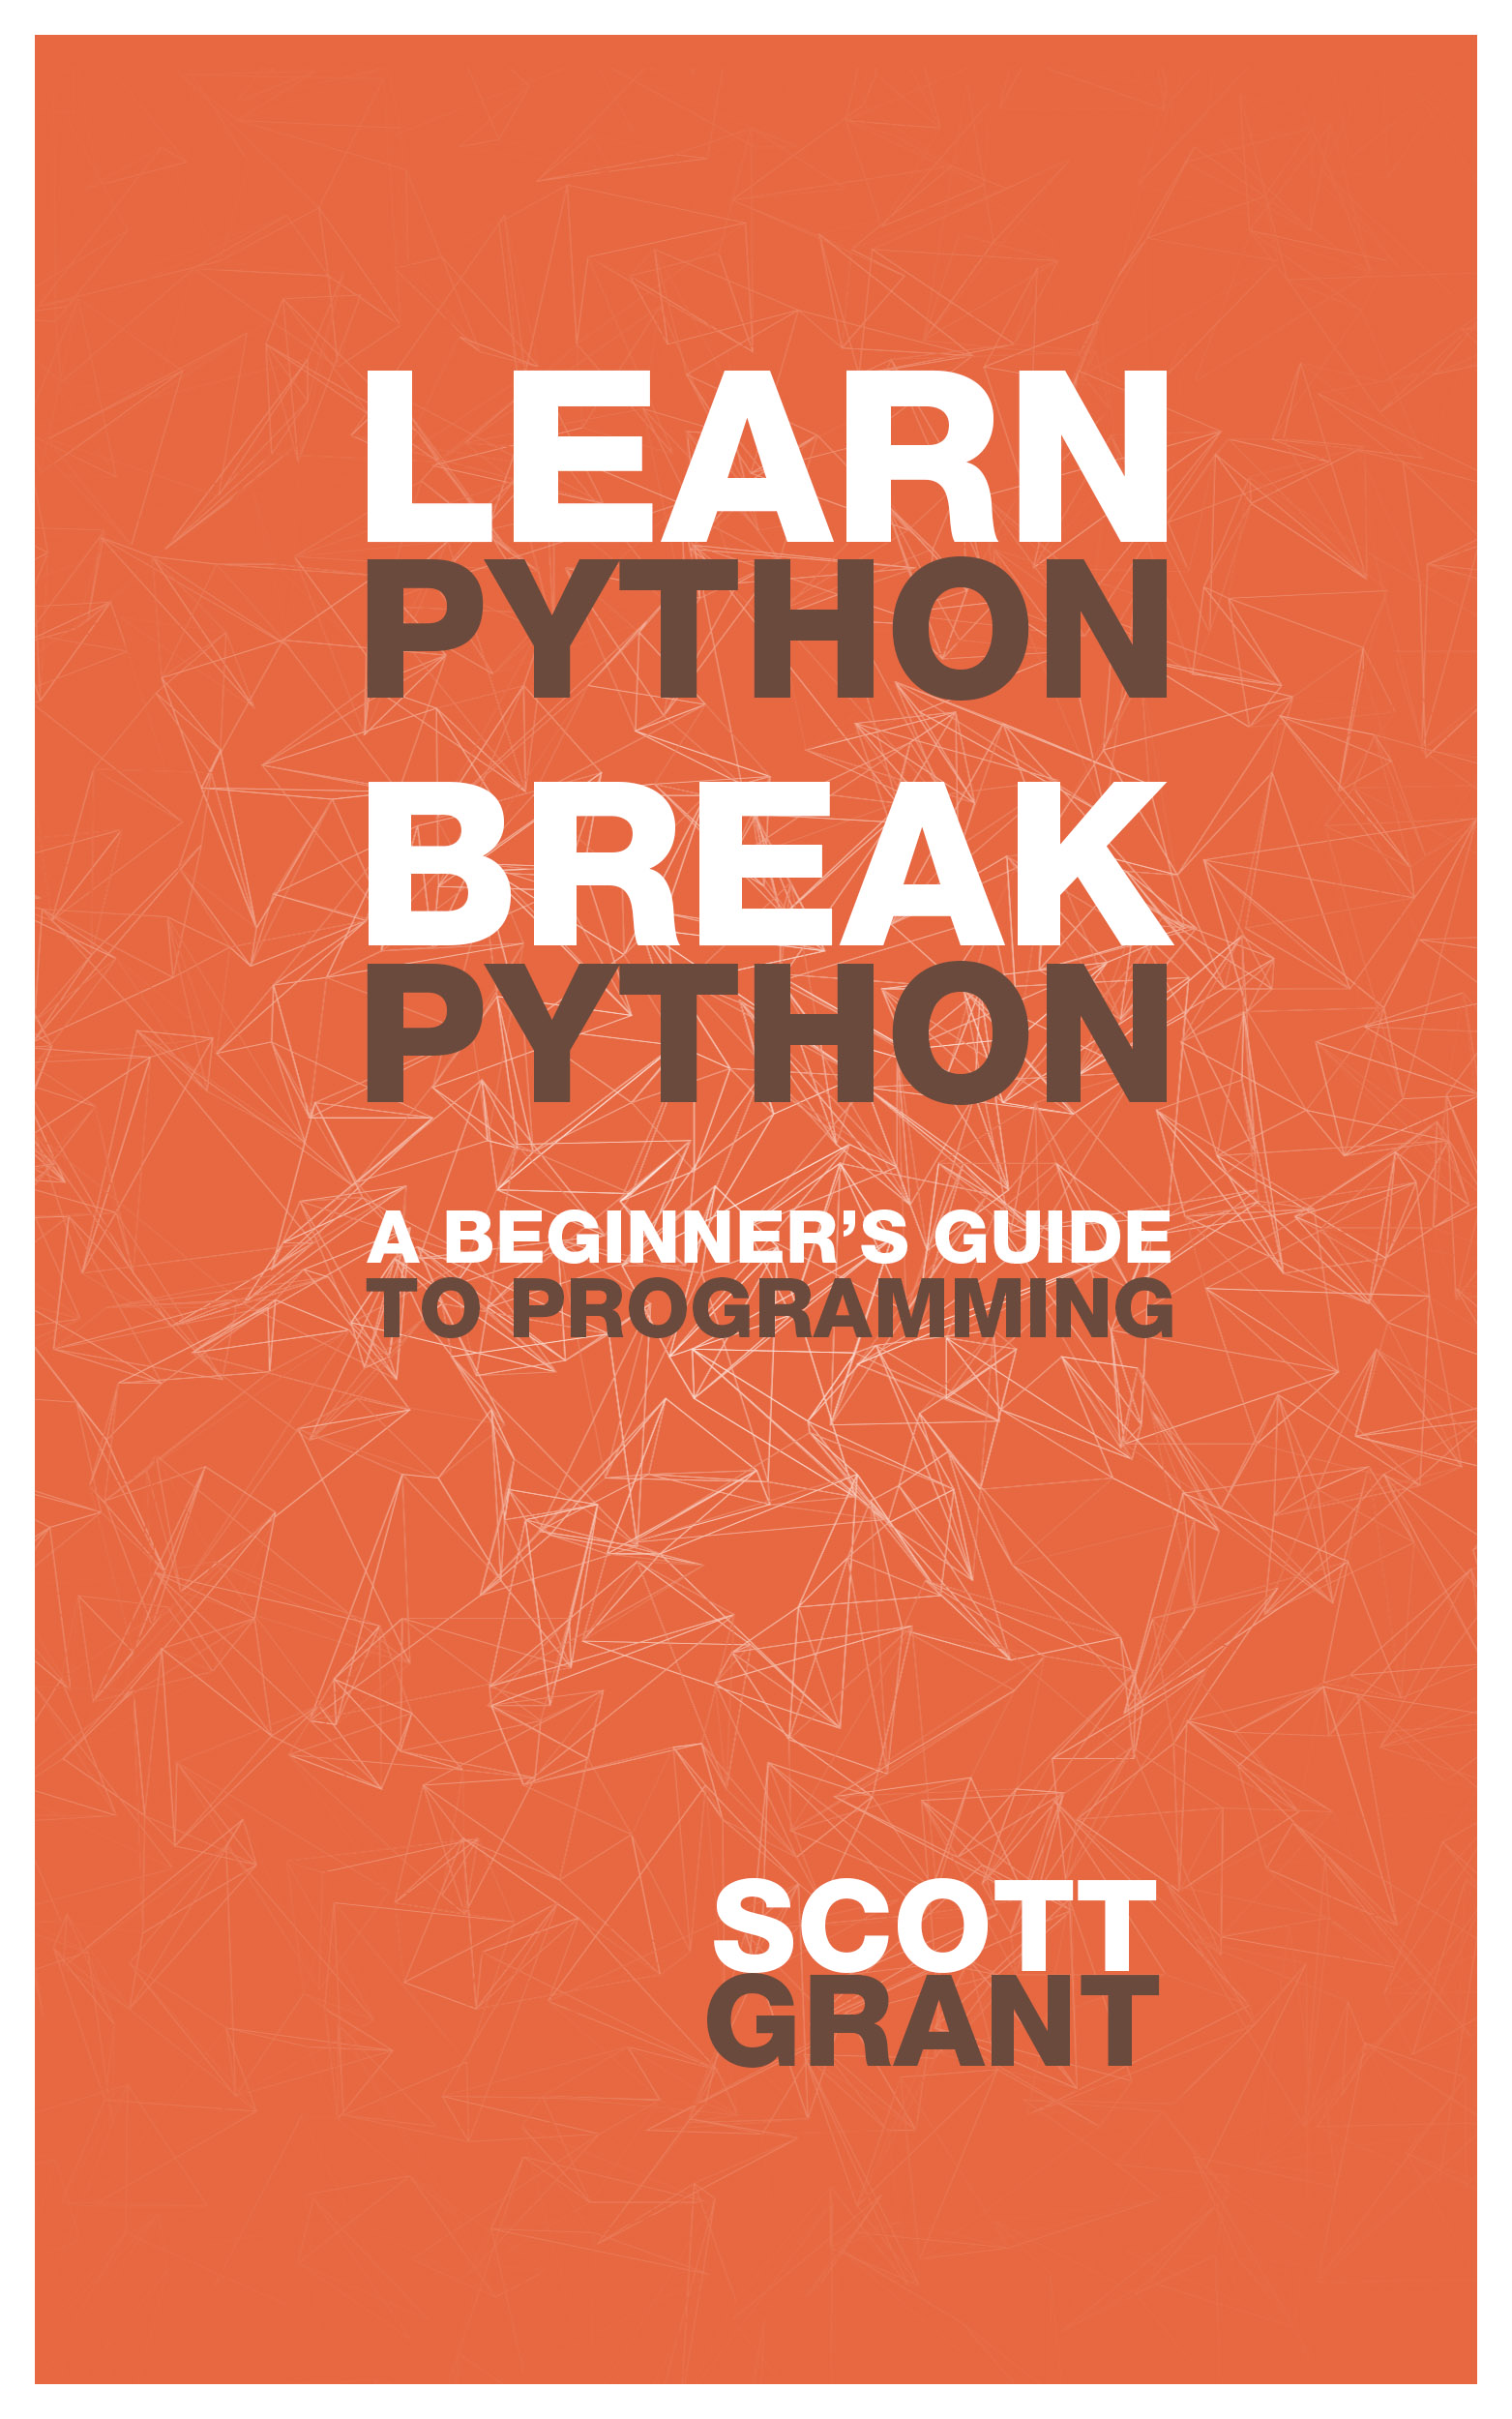 Learn Python, Break Python: A Beginner's Guide to Programming